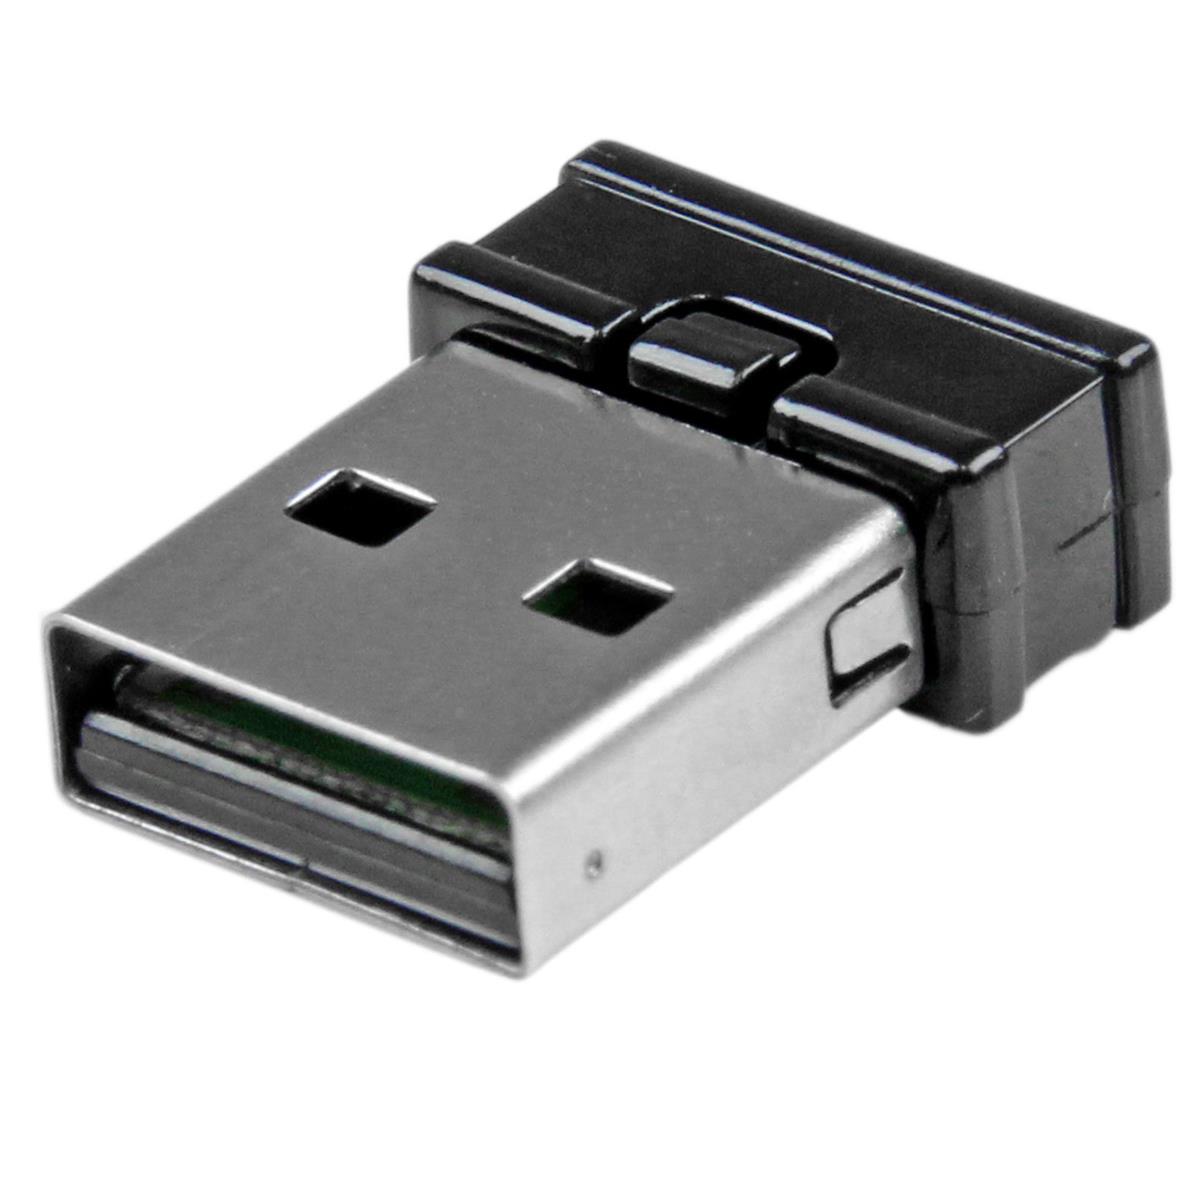 

StarTech 10m / 32.81' Class 2 EDR Wireless Dongle Mini USB Bluetooth 4.0 Adapter